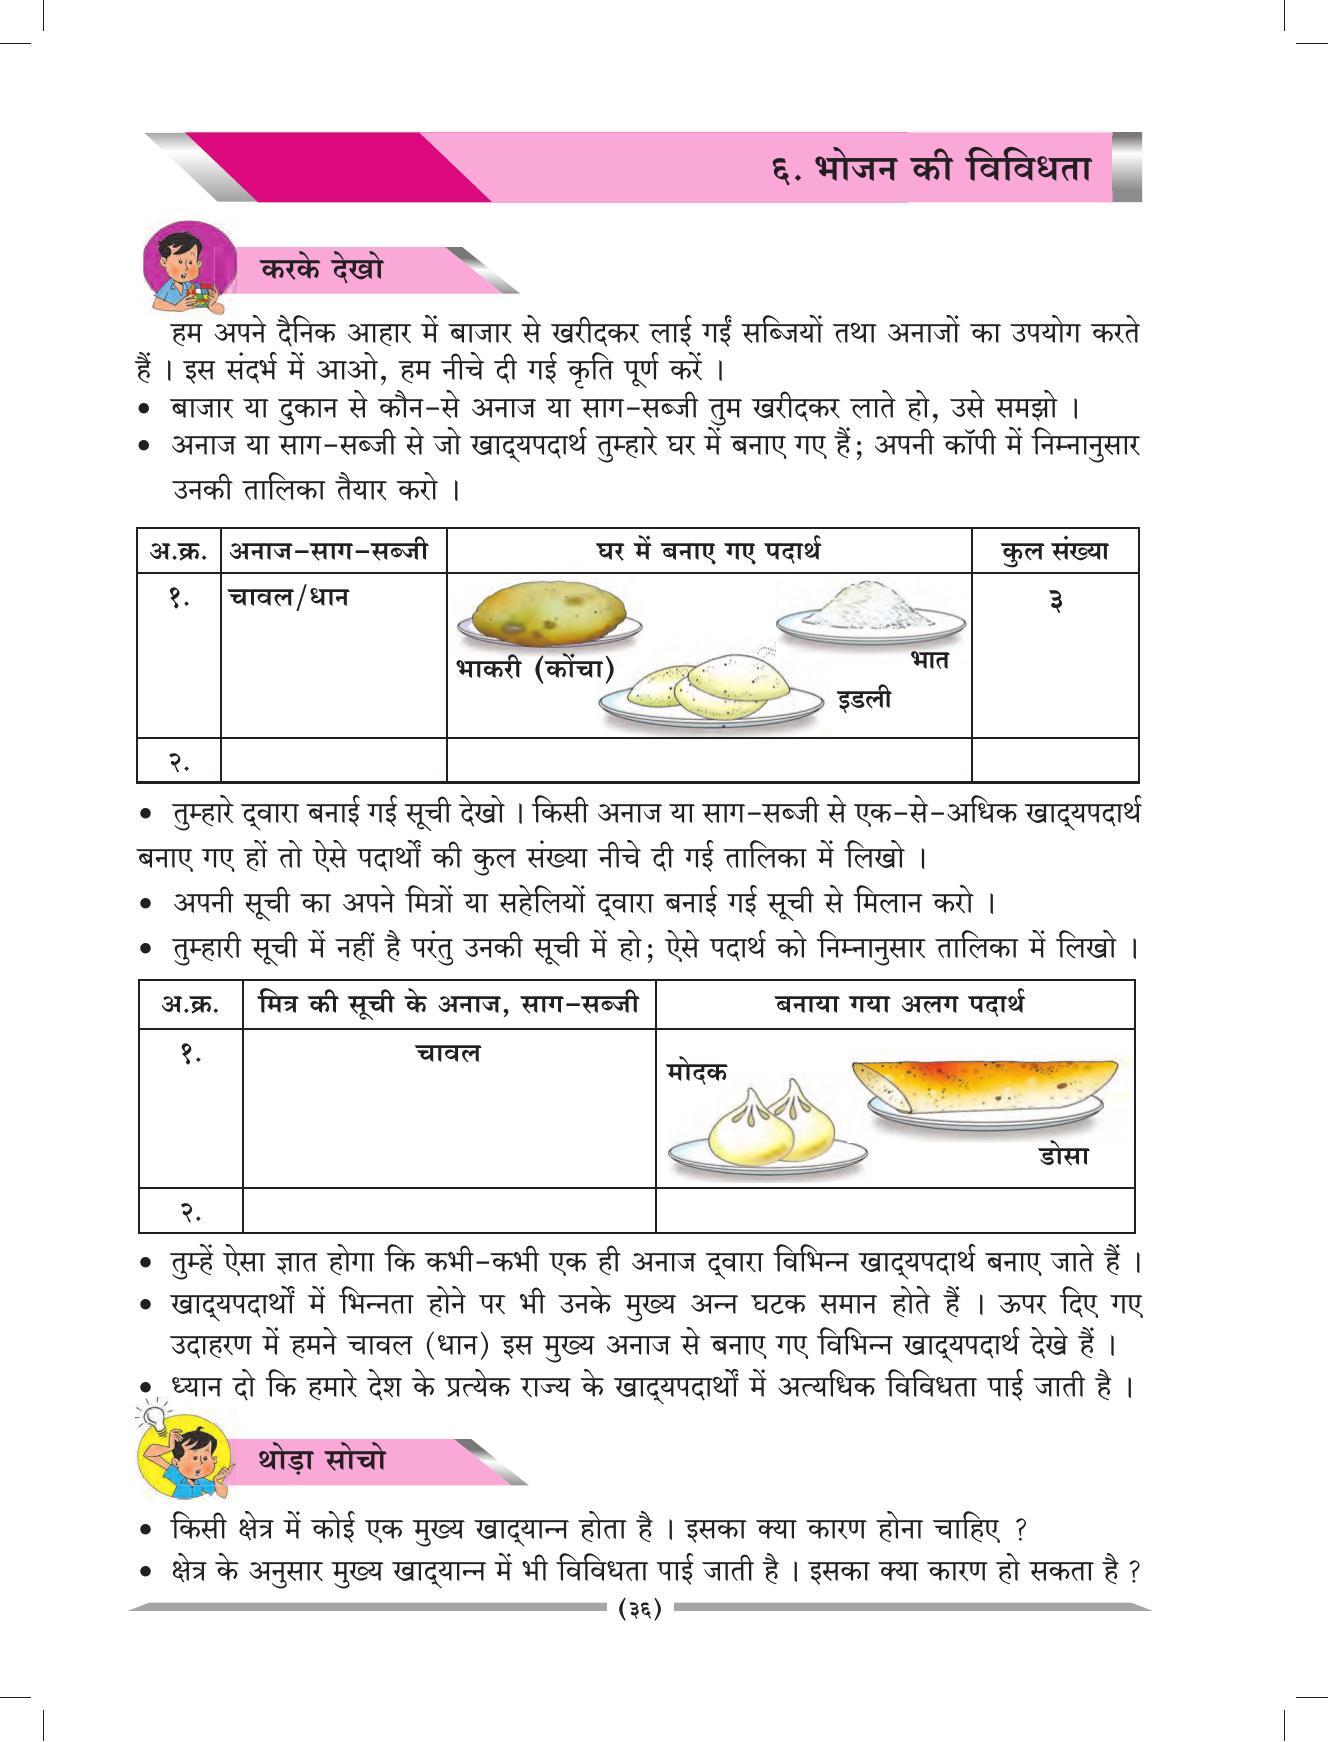 Maharashtra Board Class 4 EVS 1 (Hindi Medium) Textbook - Page 46